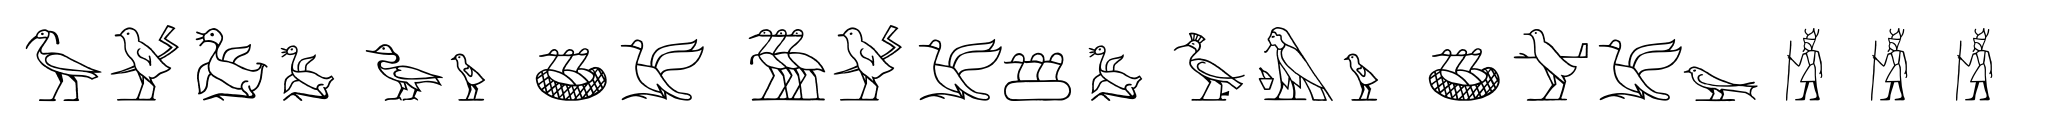 Linotype Hieroglyphes Two image